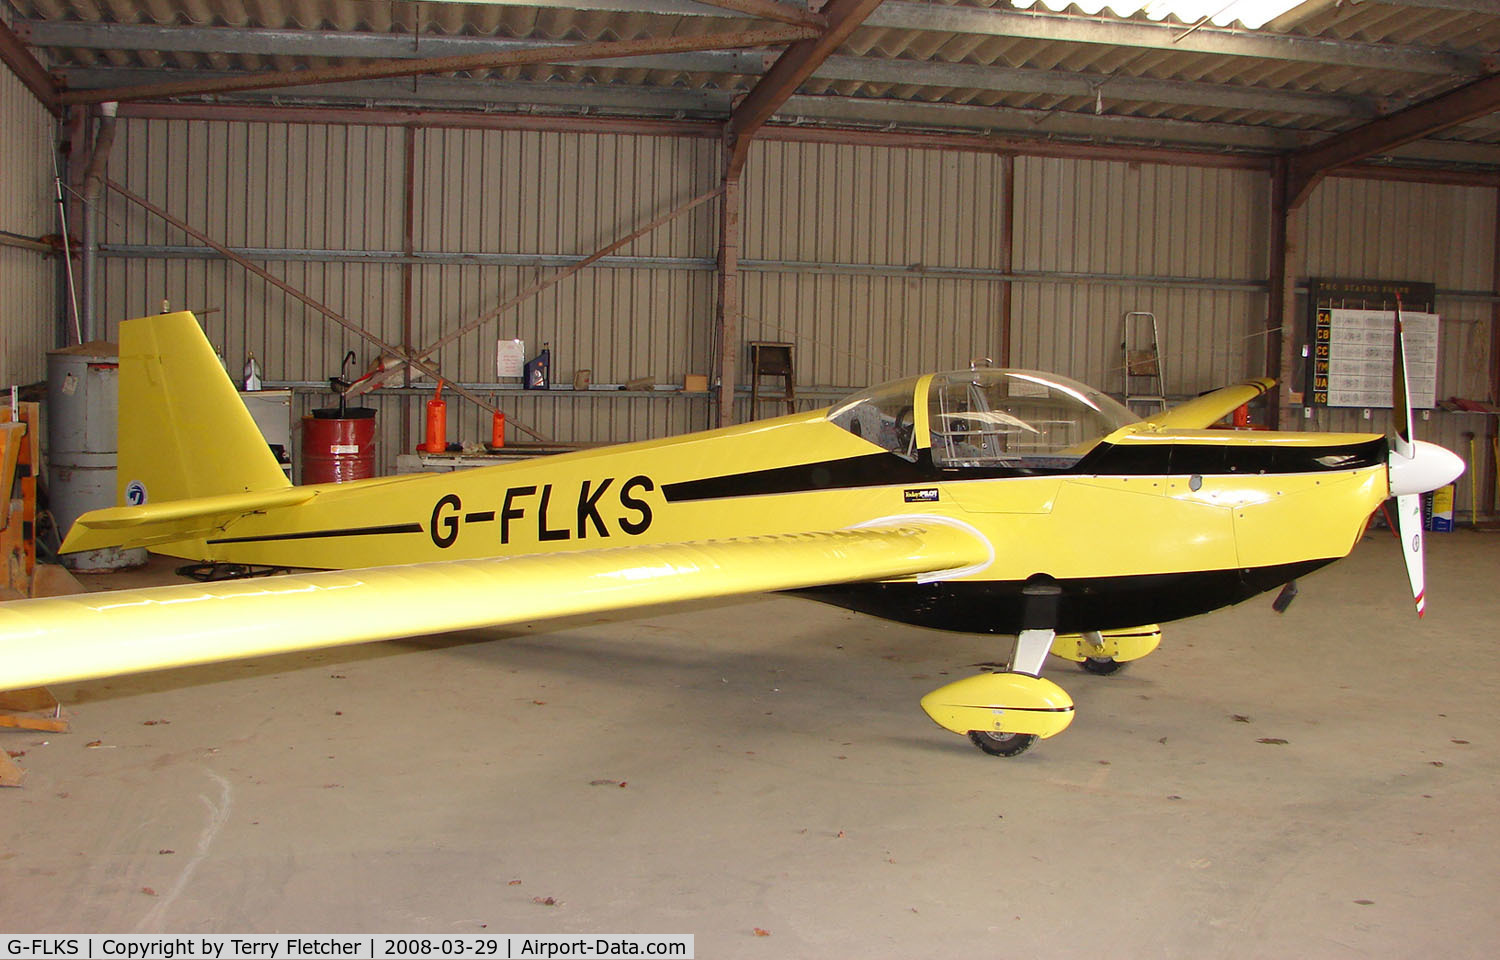 G-FLKS, 2000 Scheibe SF-25C Falke C/N 44662, Hangared at Dunstable Downs